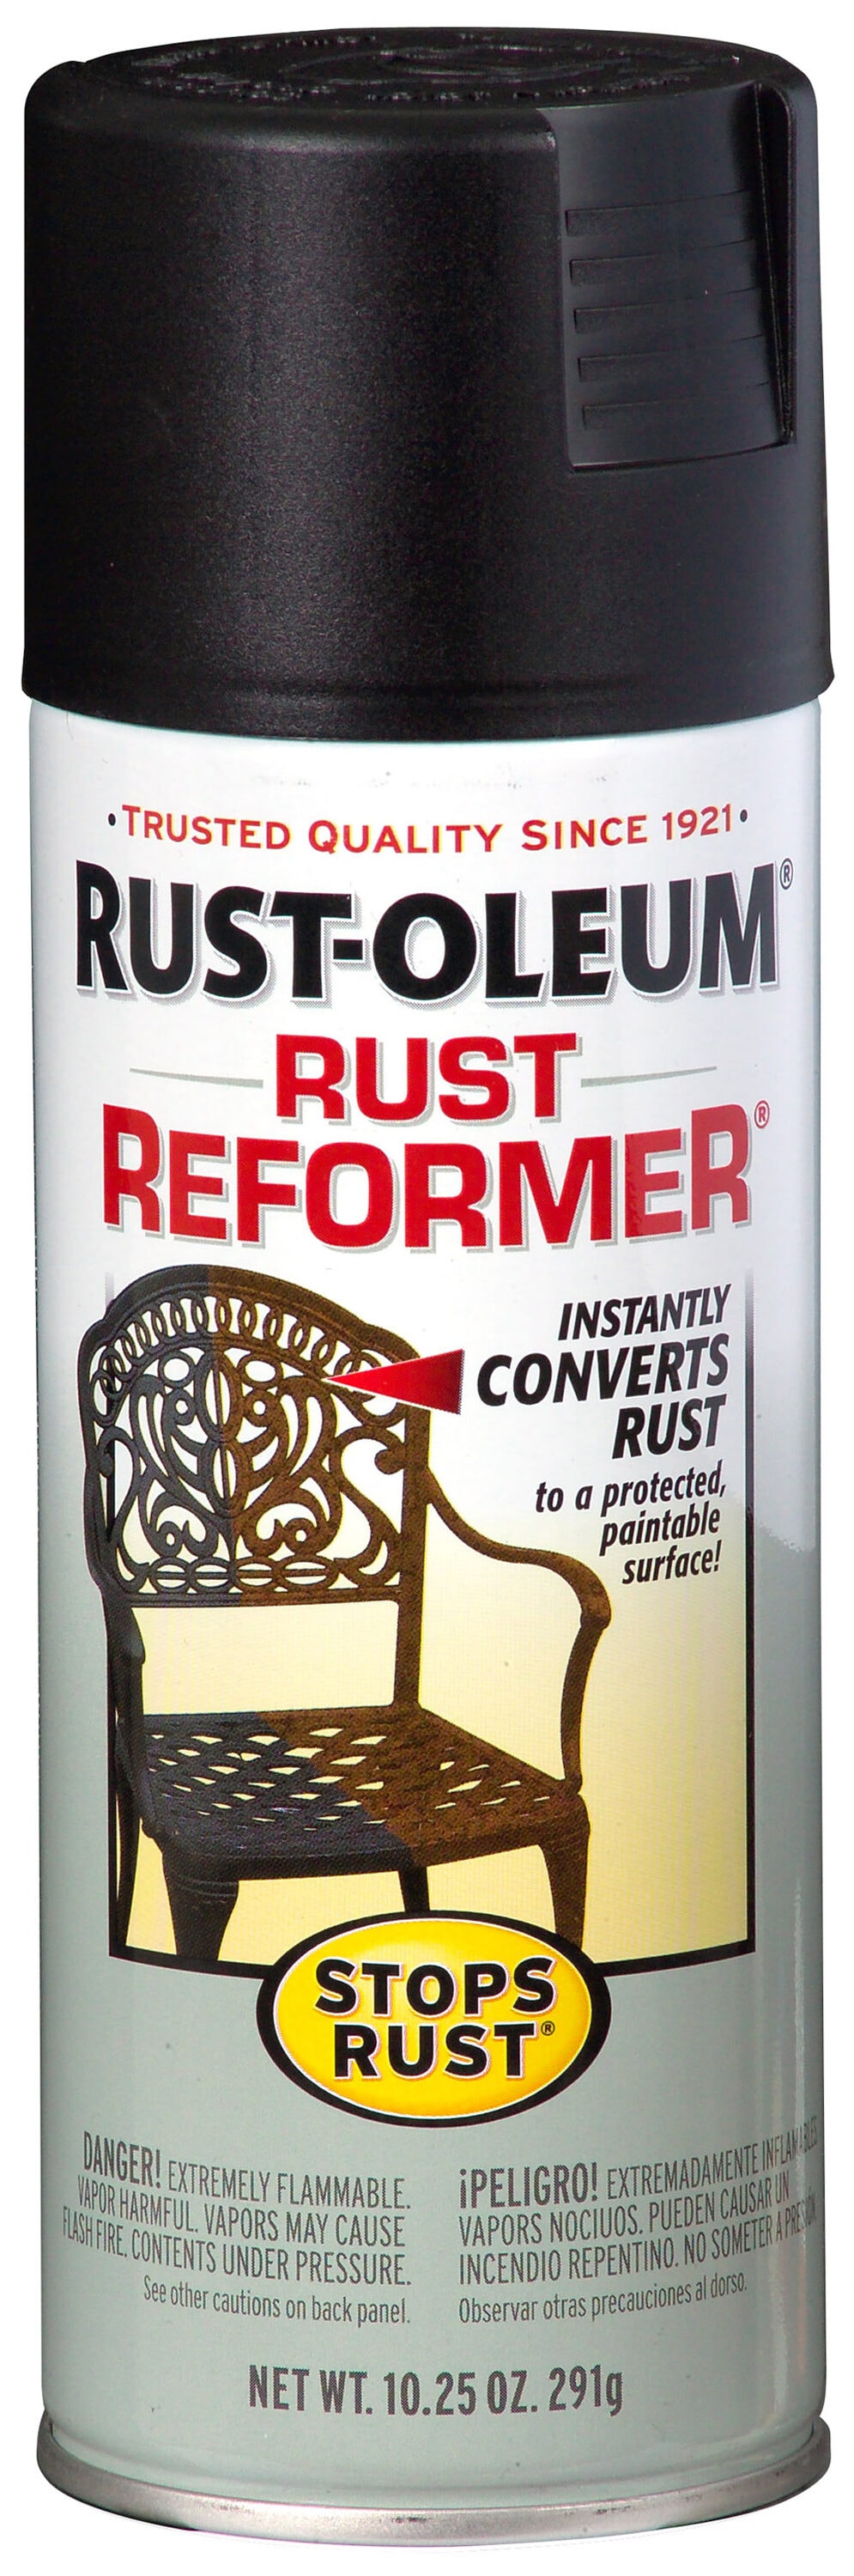 Rust-Oleum Stops Rust Automotive Primer Spray, 12 oz. - Dark Gray